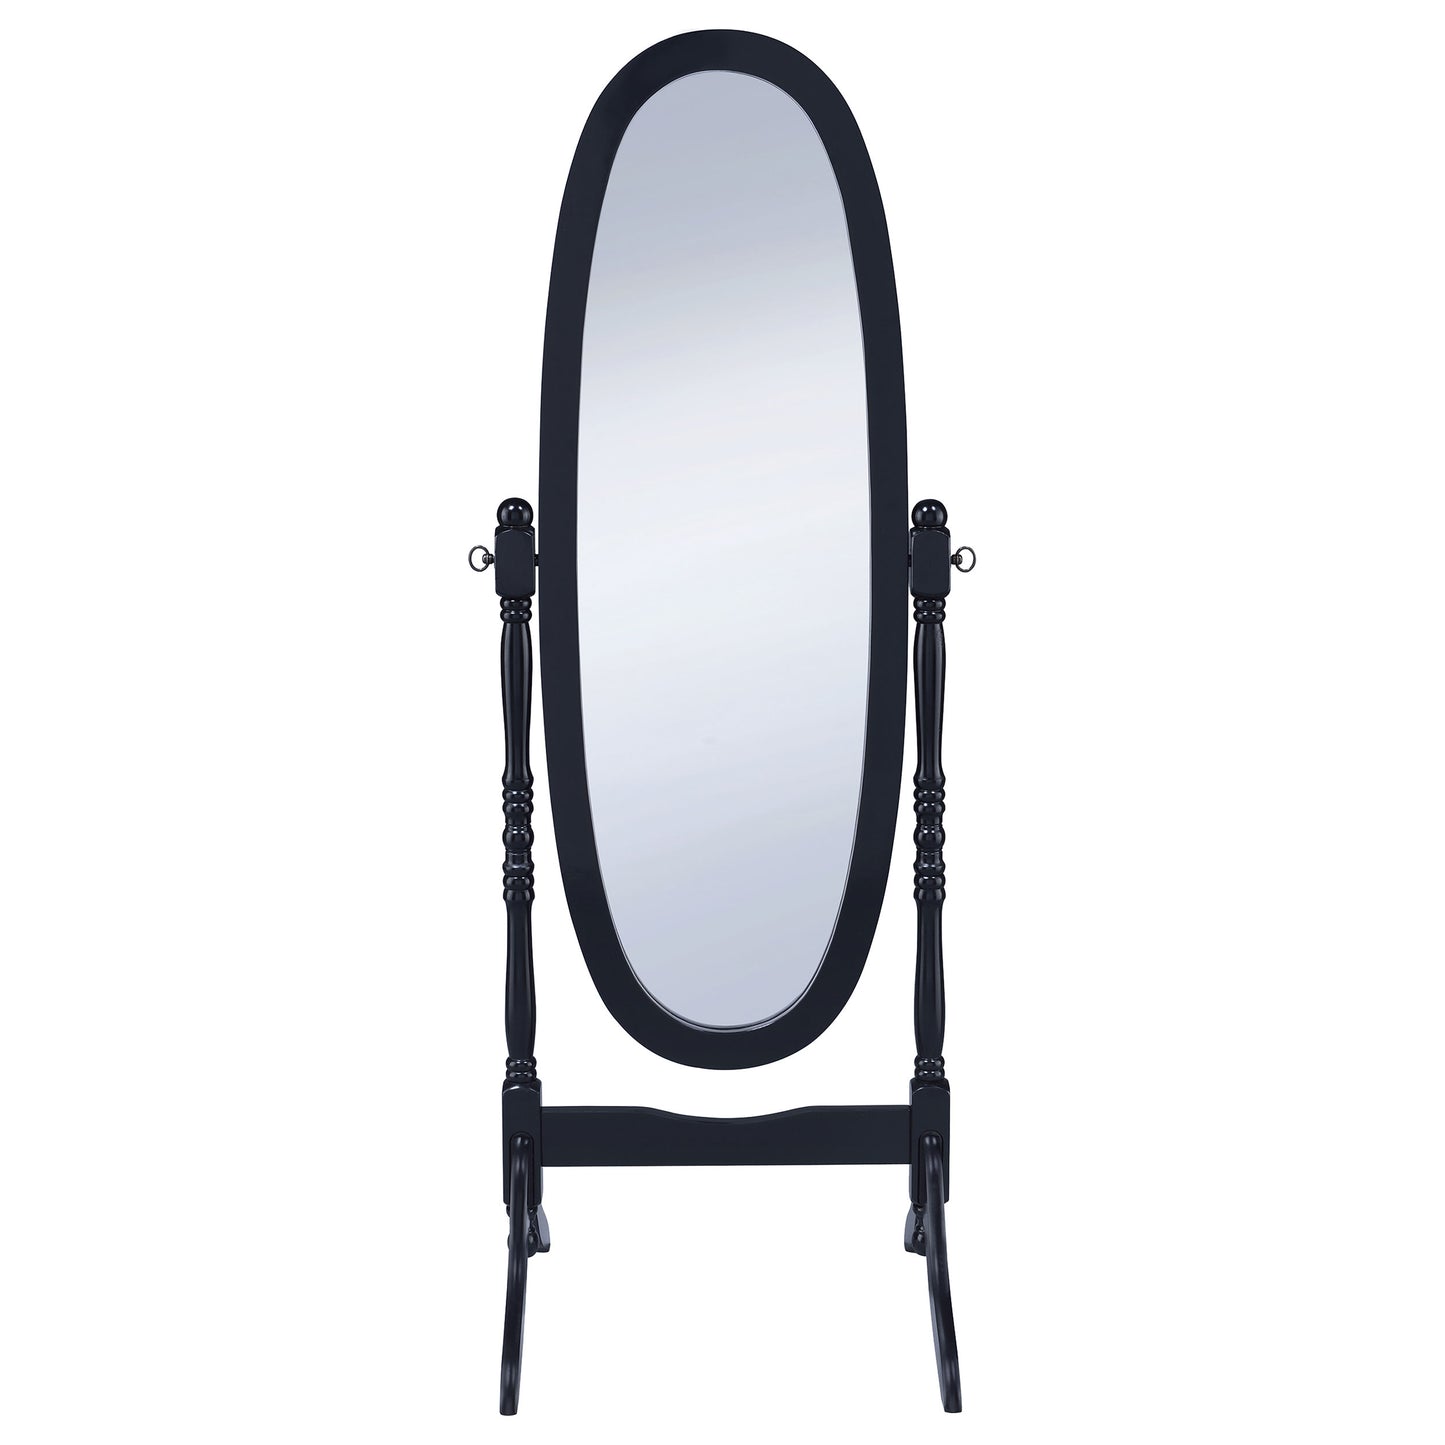 Foyet Oval Cheval Mirror Black